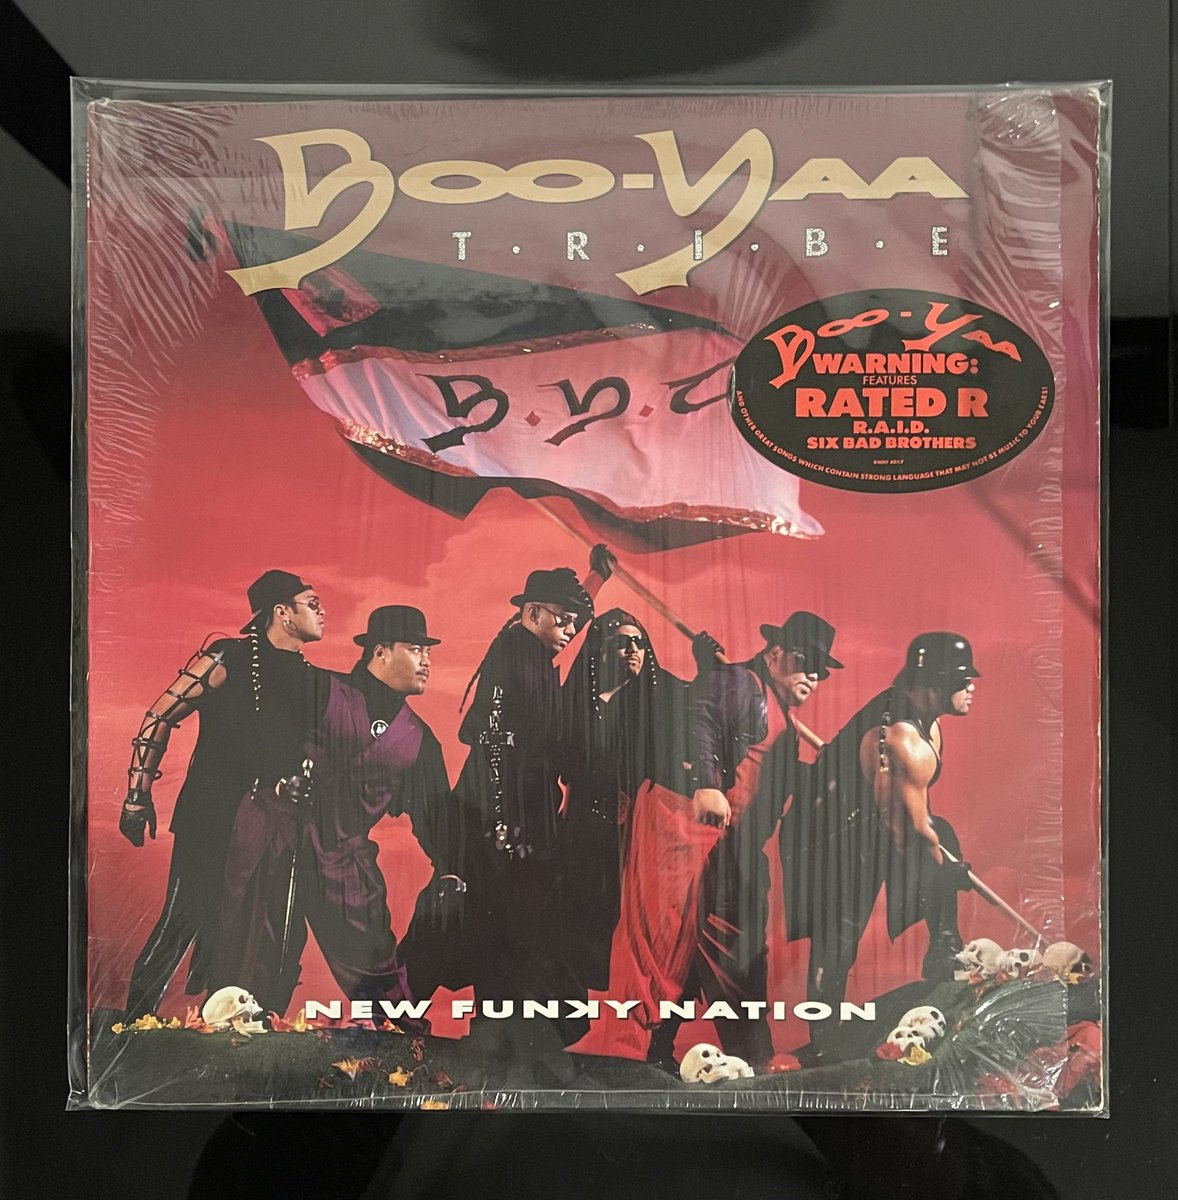 Boo-Yaa T.R.I.B.E. New Funky Nation 1990 Original U.S Press Released 32 years ago today ripgodfather ripganxstaridd